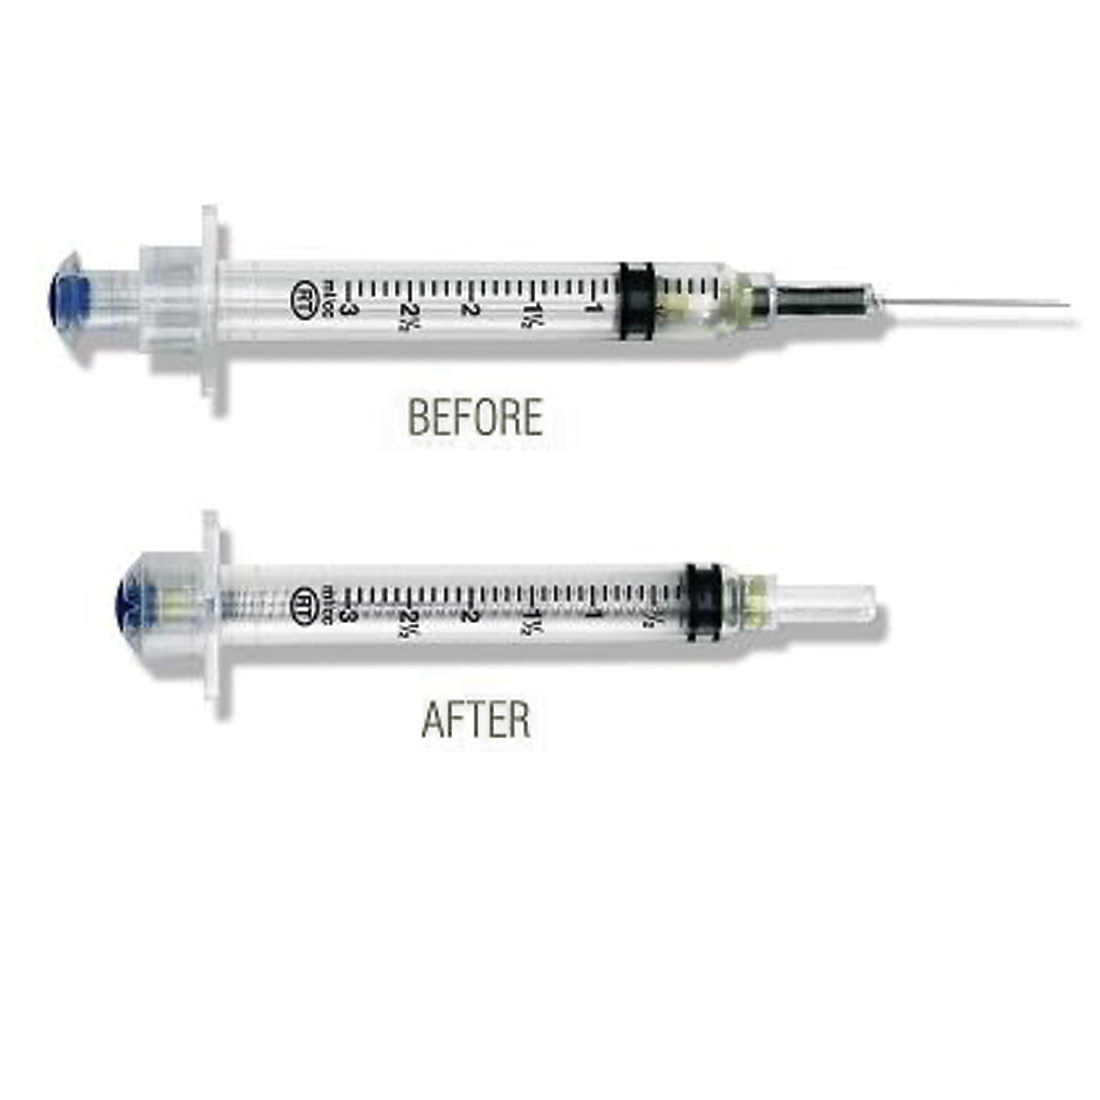 1 cc TB Syringe w/ 25 G x 1" Needle - 100/Box